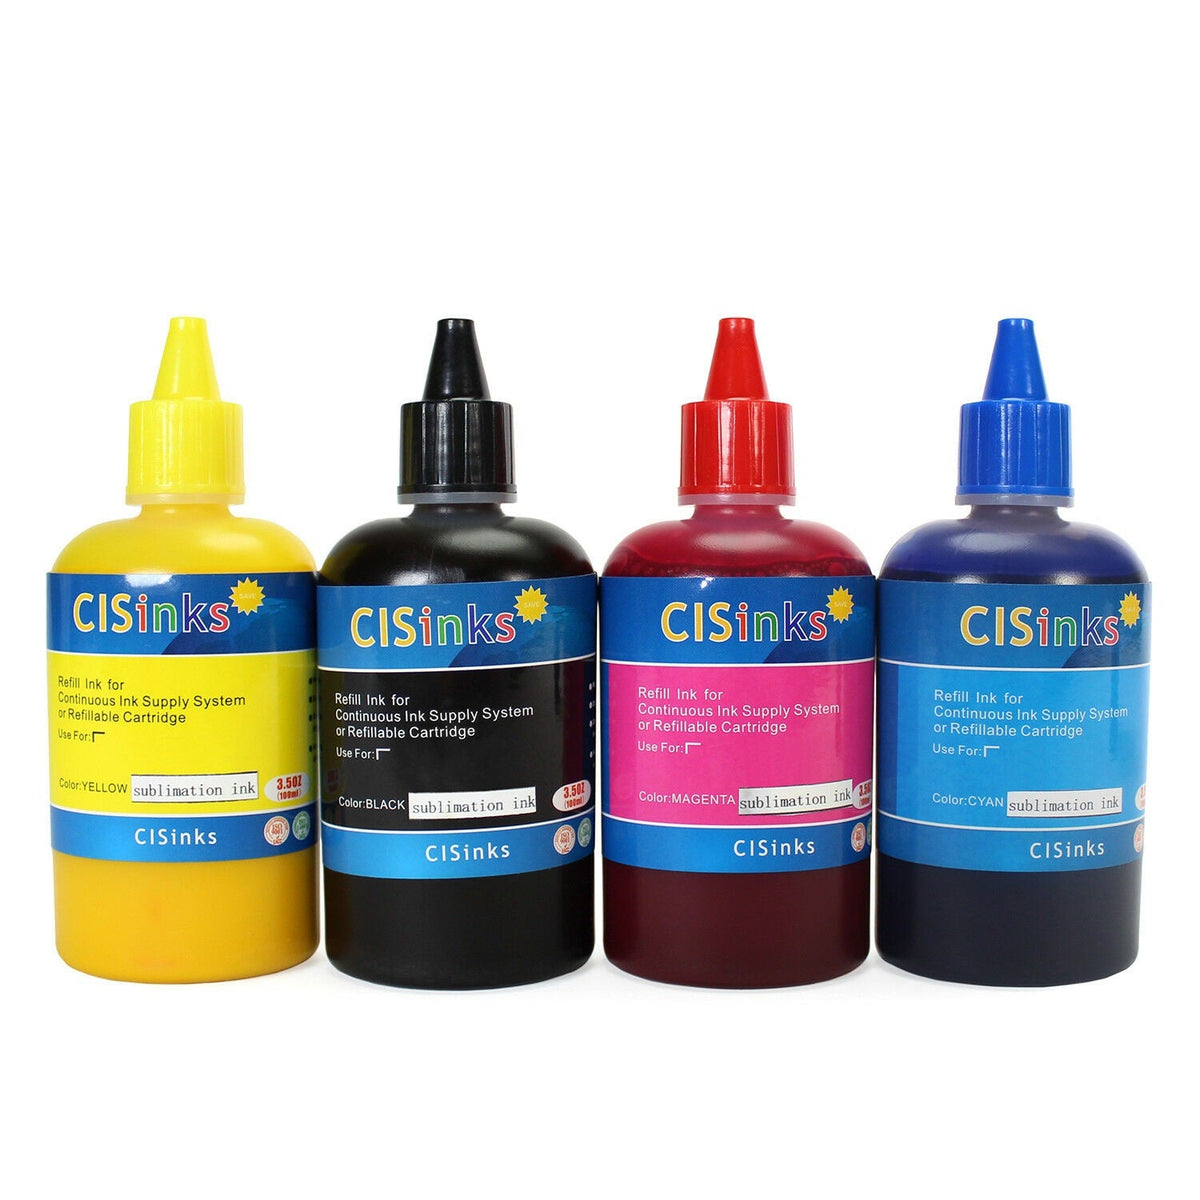 4x100ml Sublimation Ink Refill Bottle Set - 4 Color  (Black, Yellow, Cyan, Magenta)  for EcoTank, Supertank, Artisan Inkjet Printers